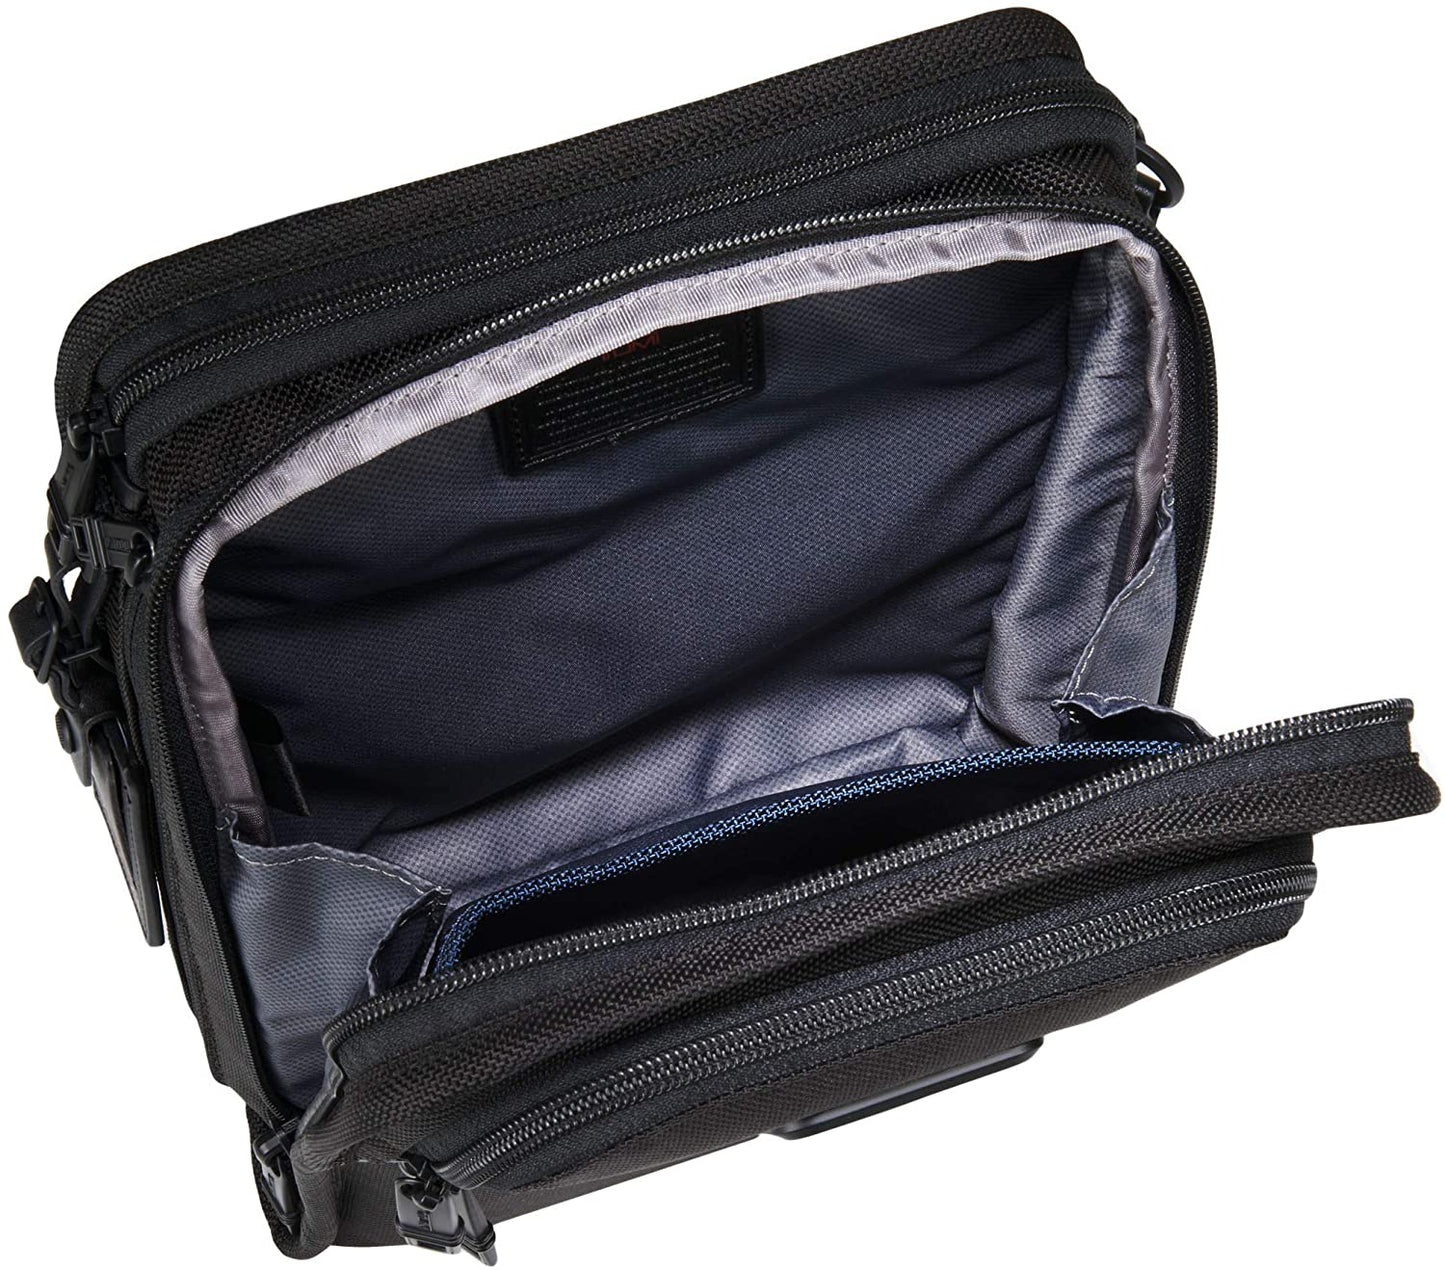 TUMI - Alpha 2 Organizer Travel Tote - Satchel Crossbody Bag for Men and Women - Black